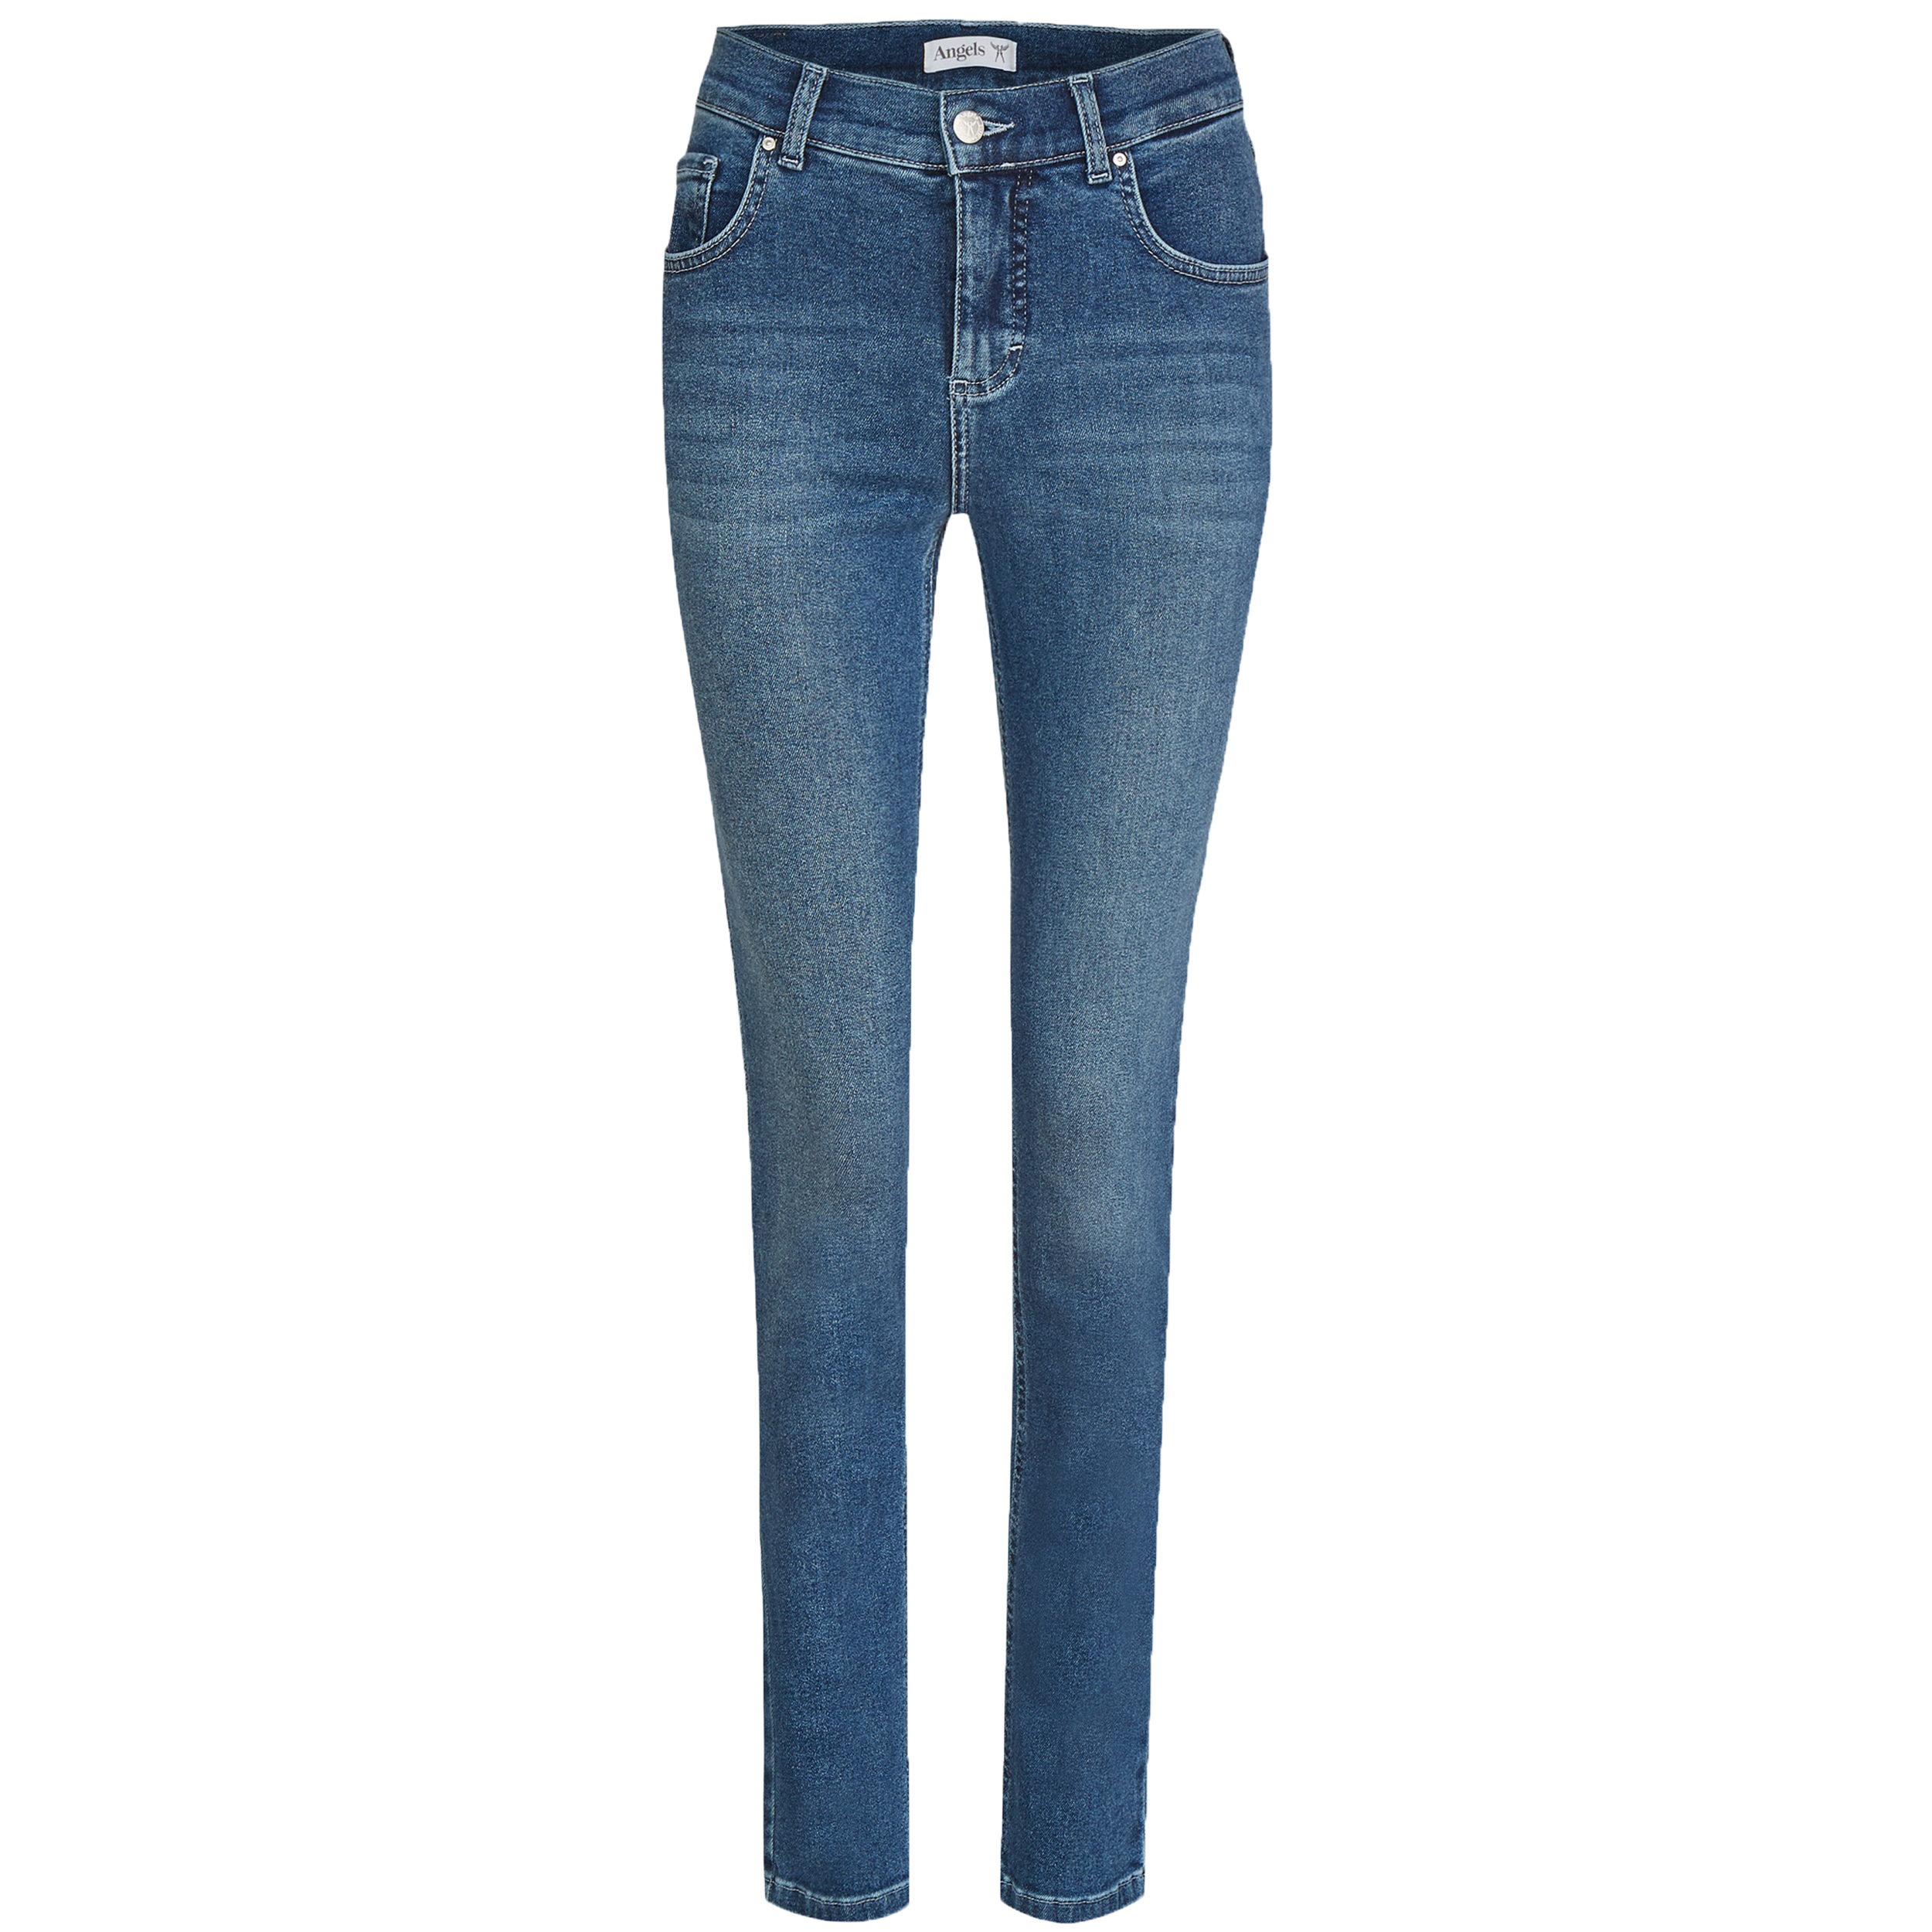 Angels Damen Jeans Skinny - mid blue 38/30